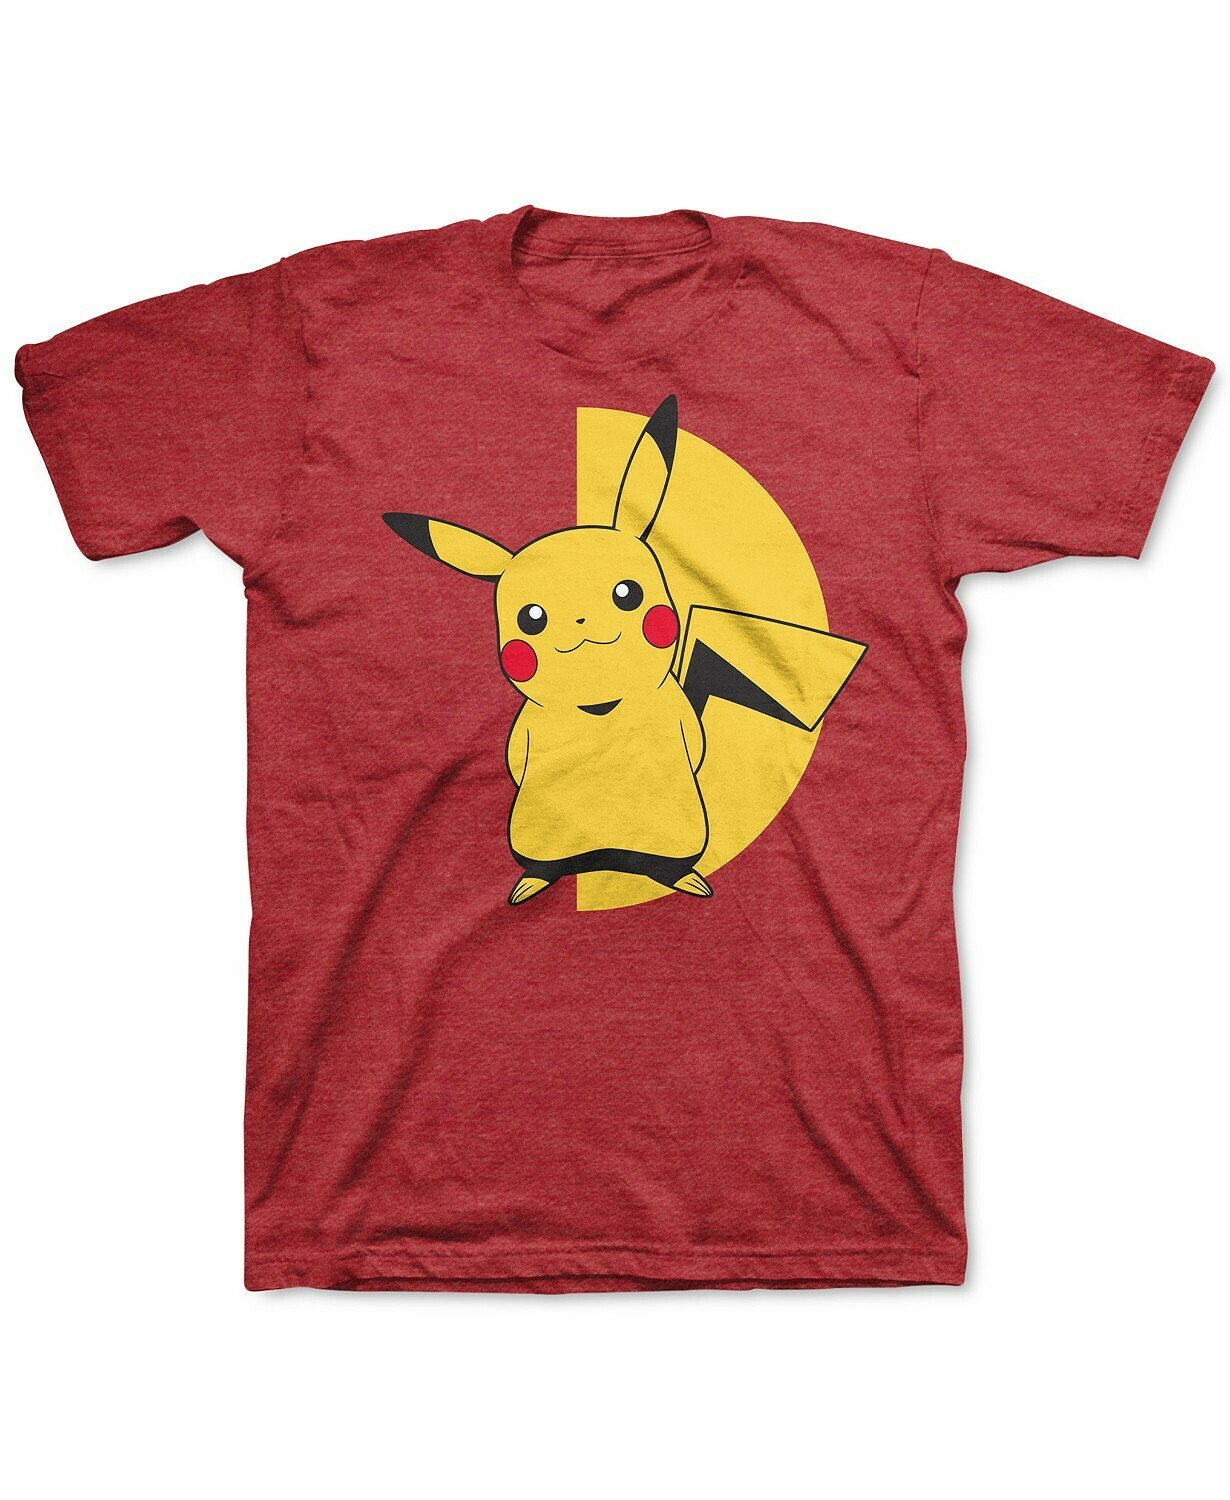 Pokemon Toddler Boys Pikachu Knockout T-Shirt